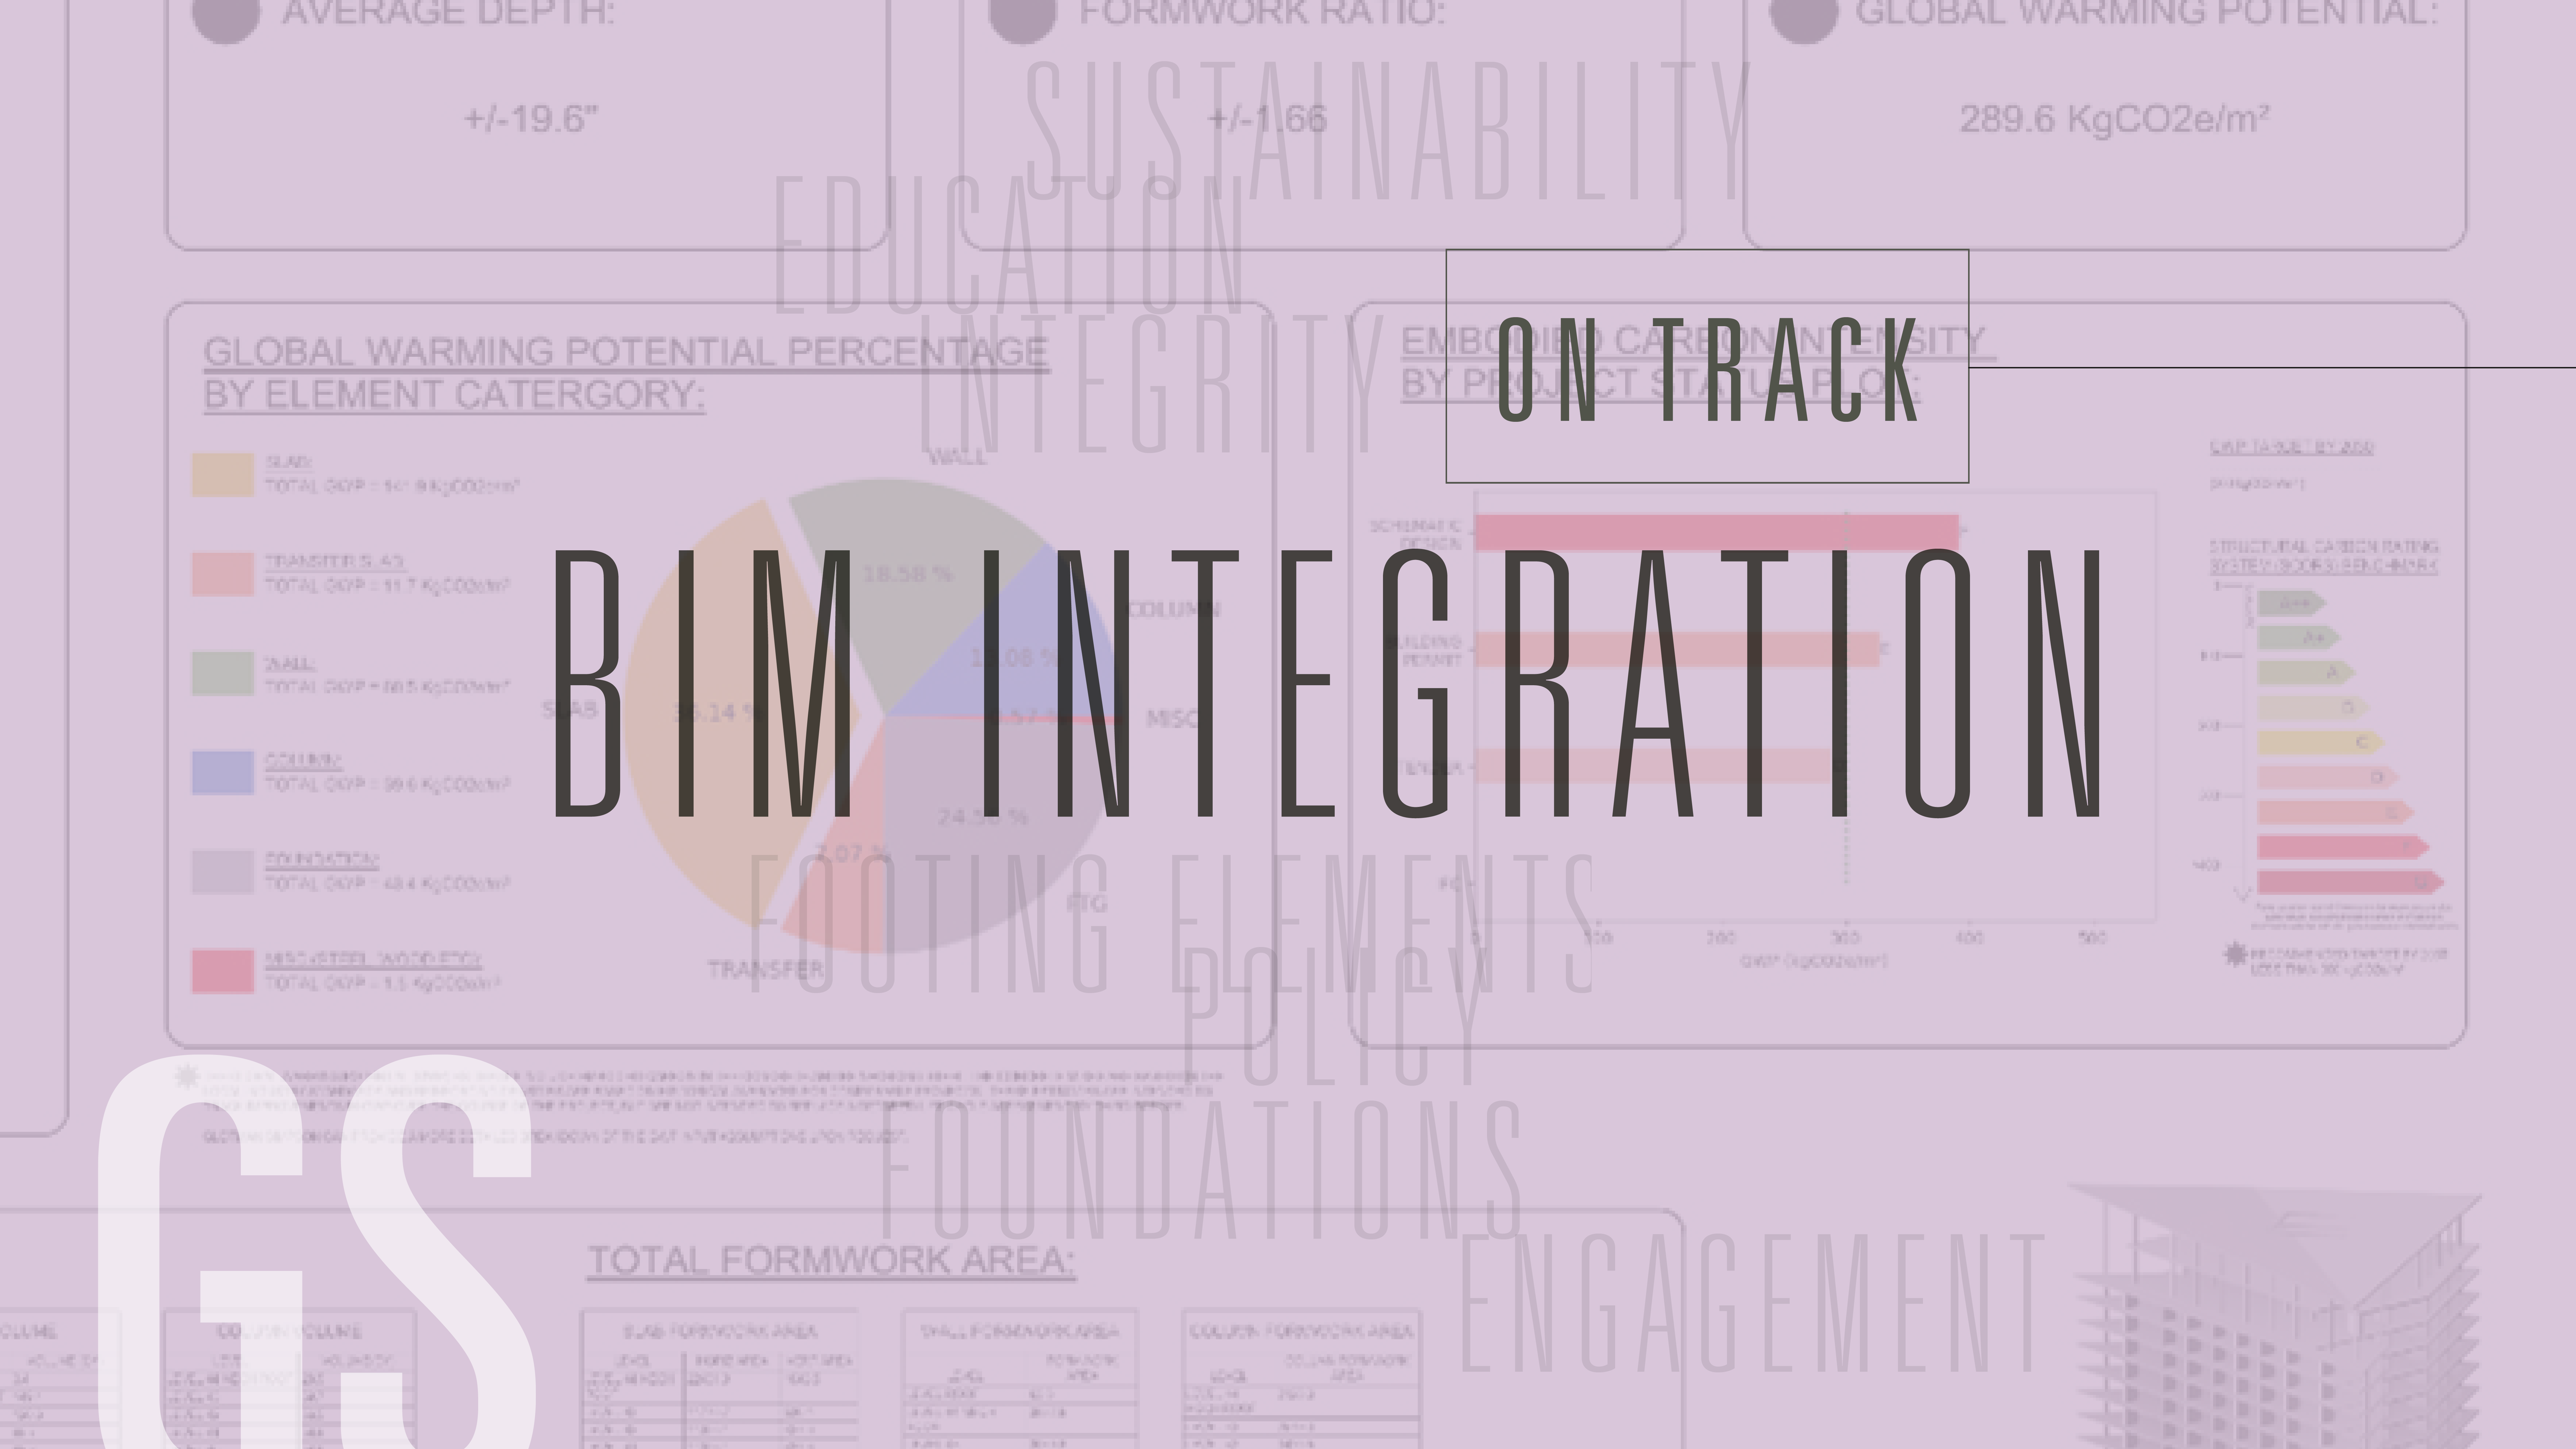 Image ofBuilding Decarbonization and Technology: BIM Integration